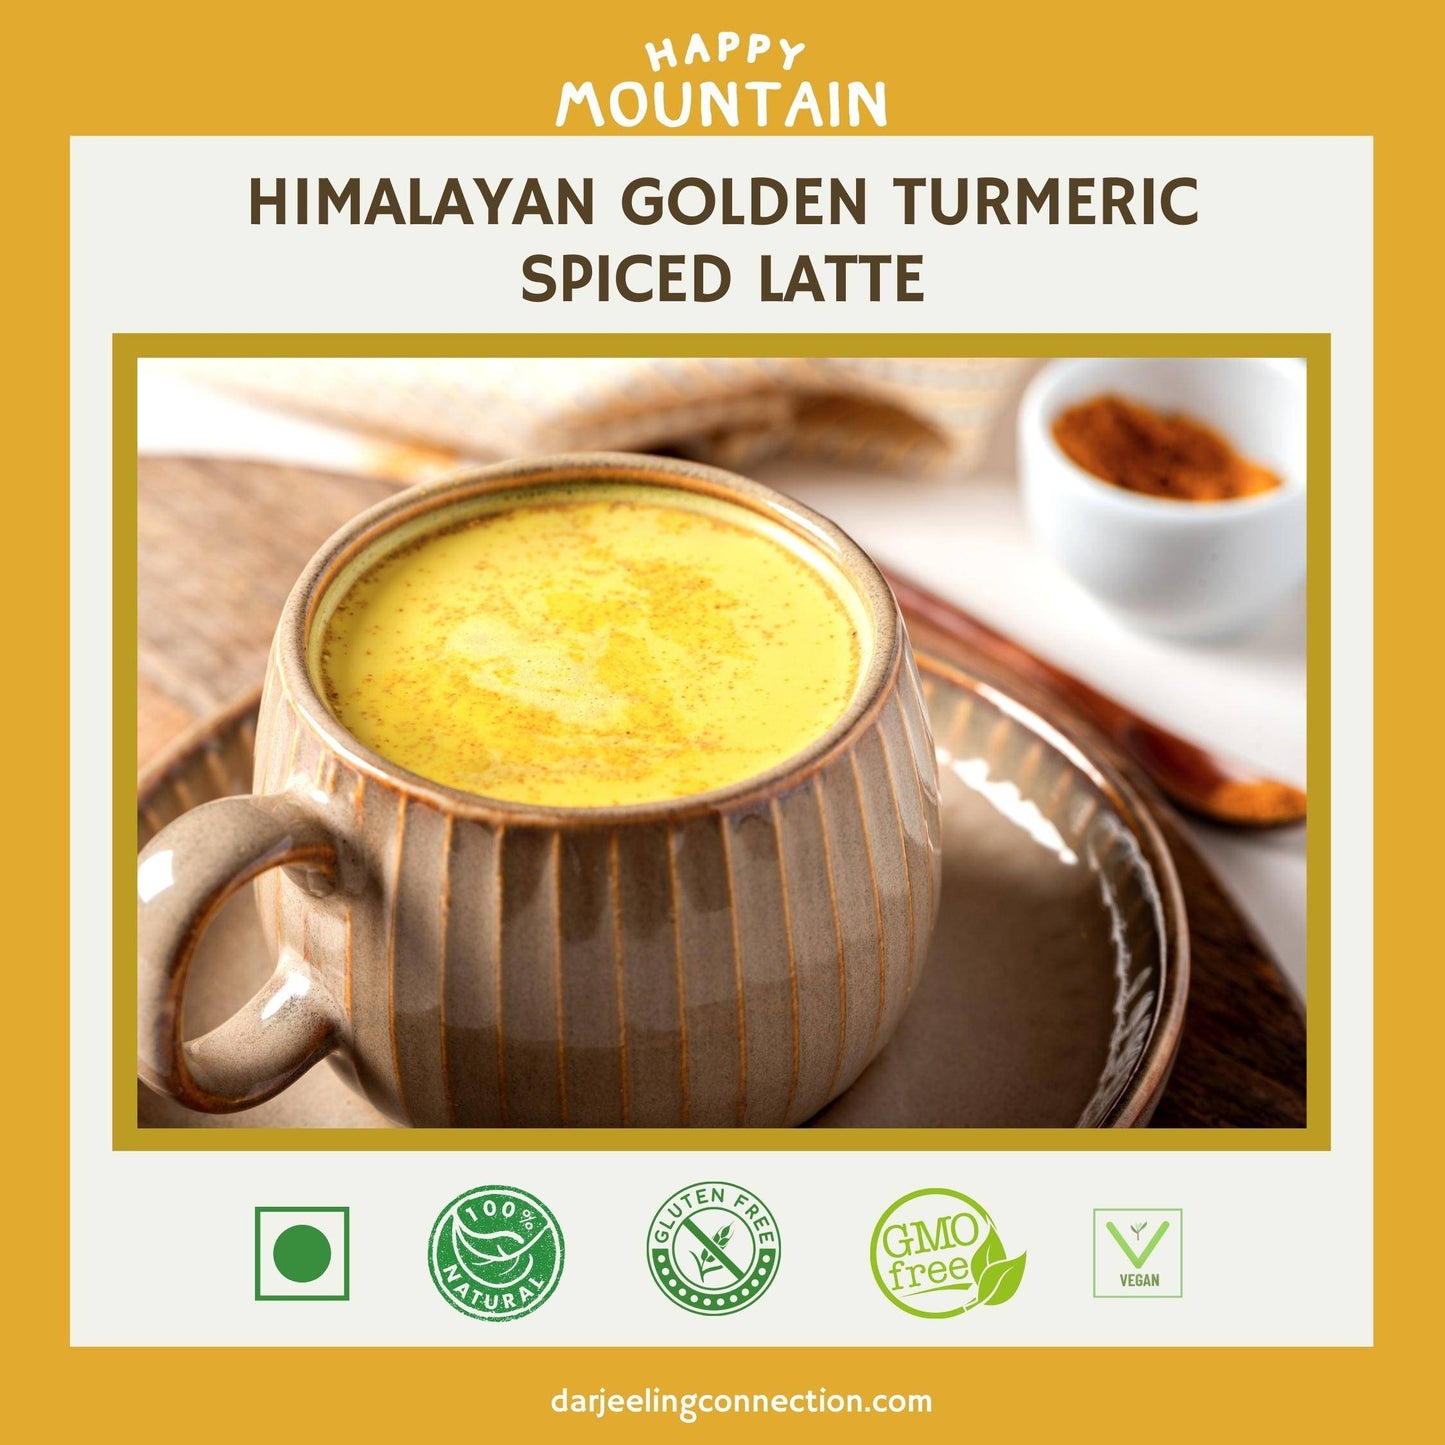 Himalayan Golden Turmeric Spiced Latte - Happy Mountain